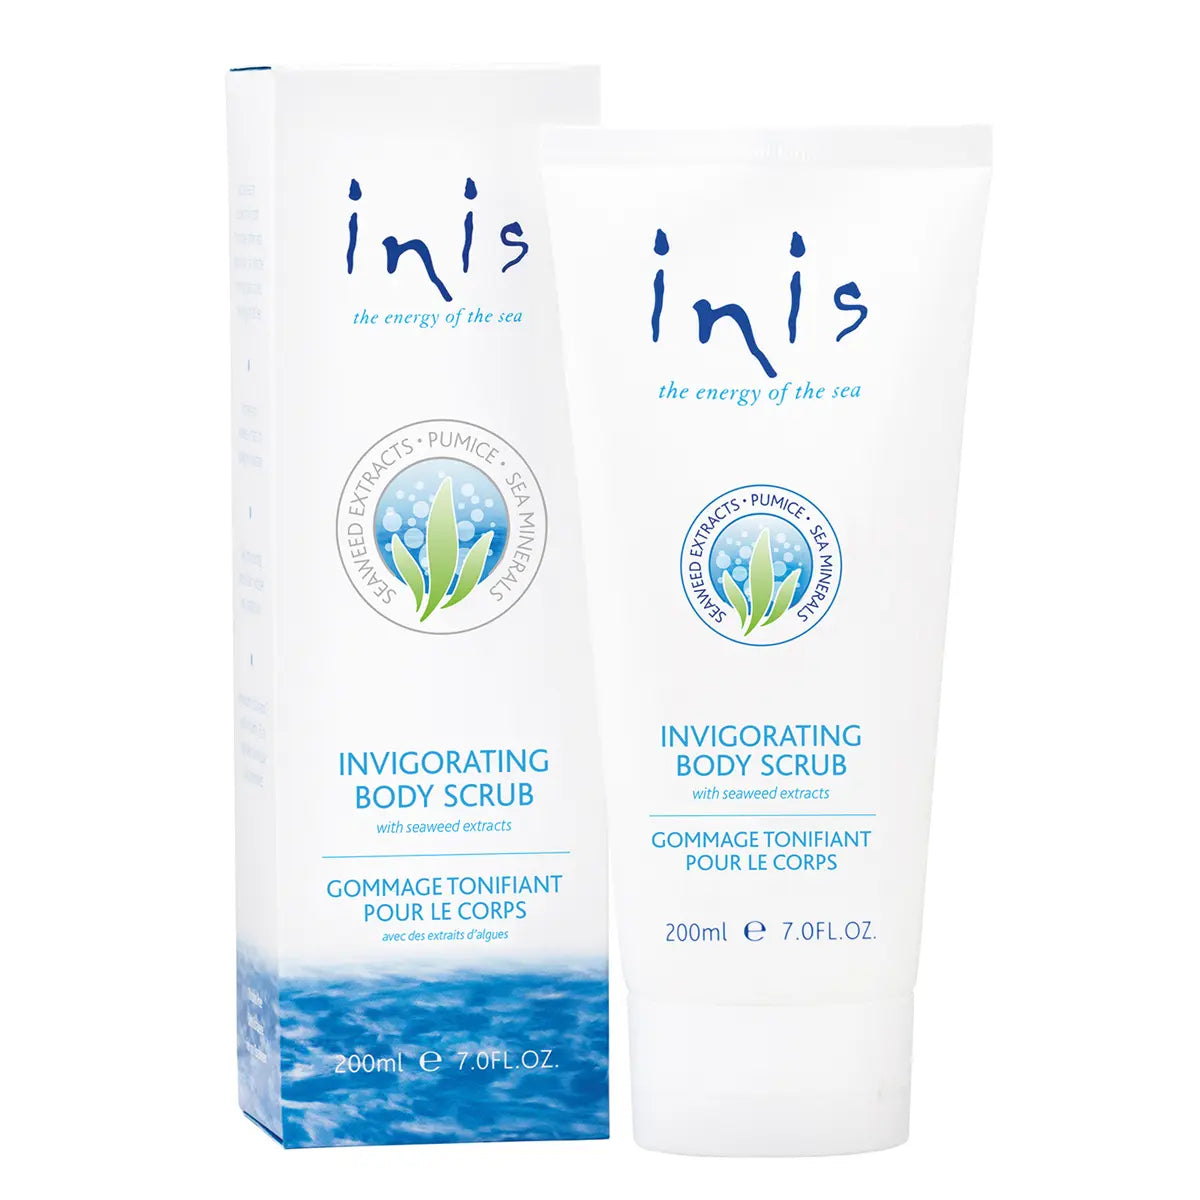 Buy Inis Invigorating Body Scrub at Southend Inis stockist Under the Sun.